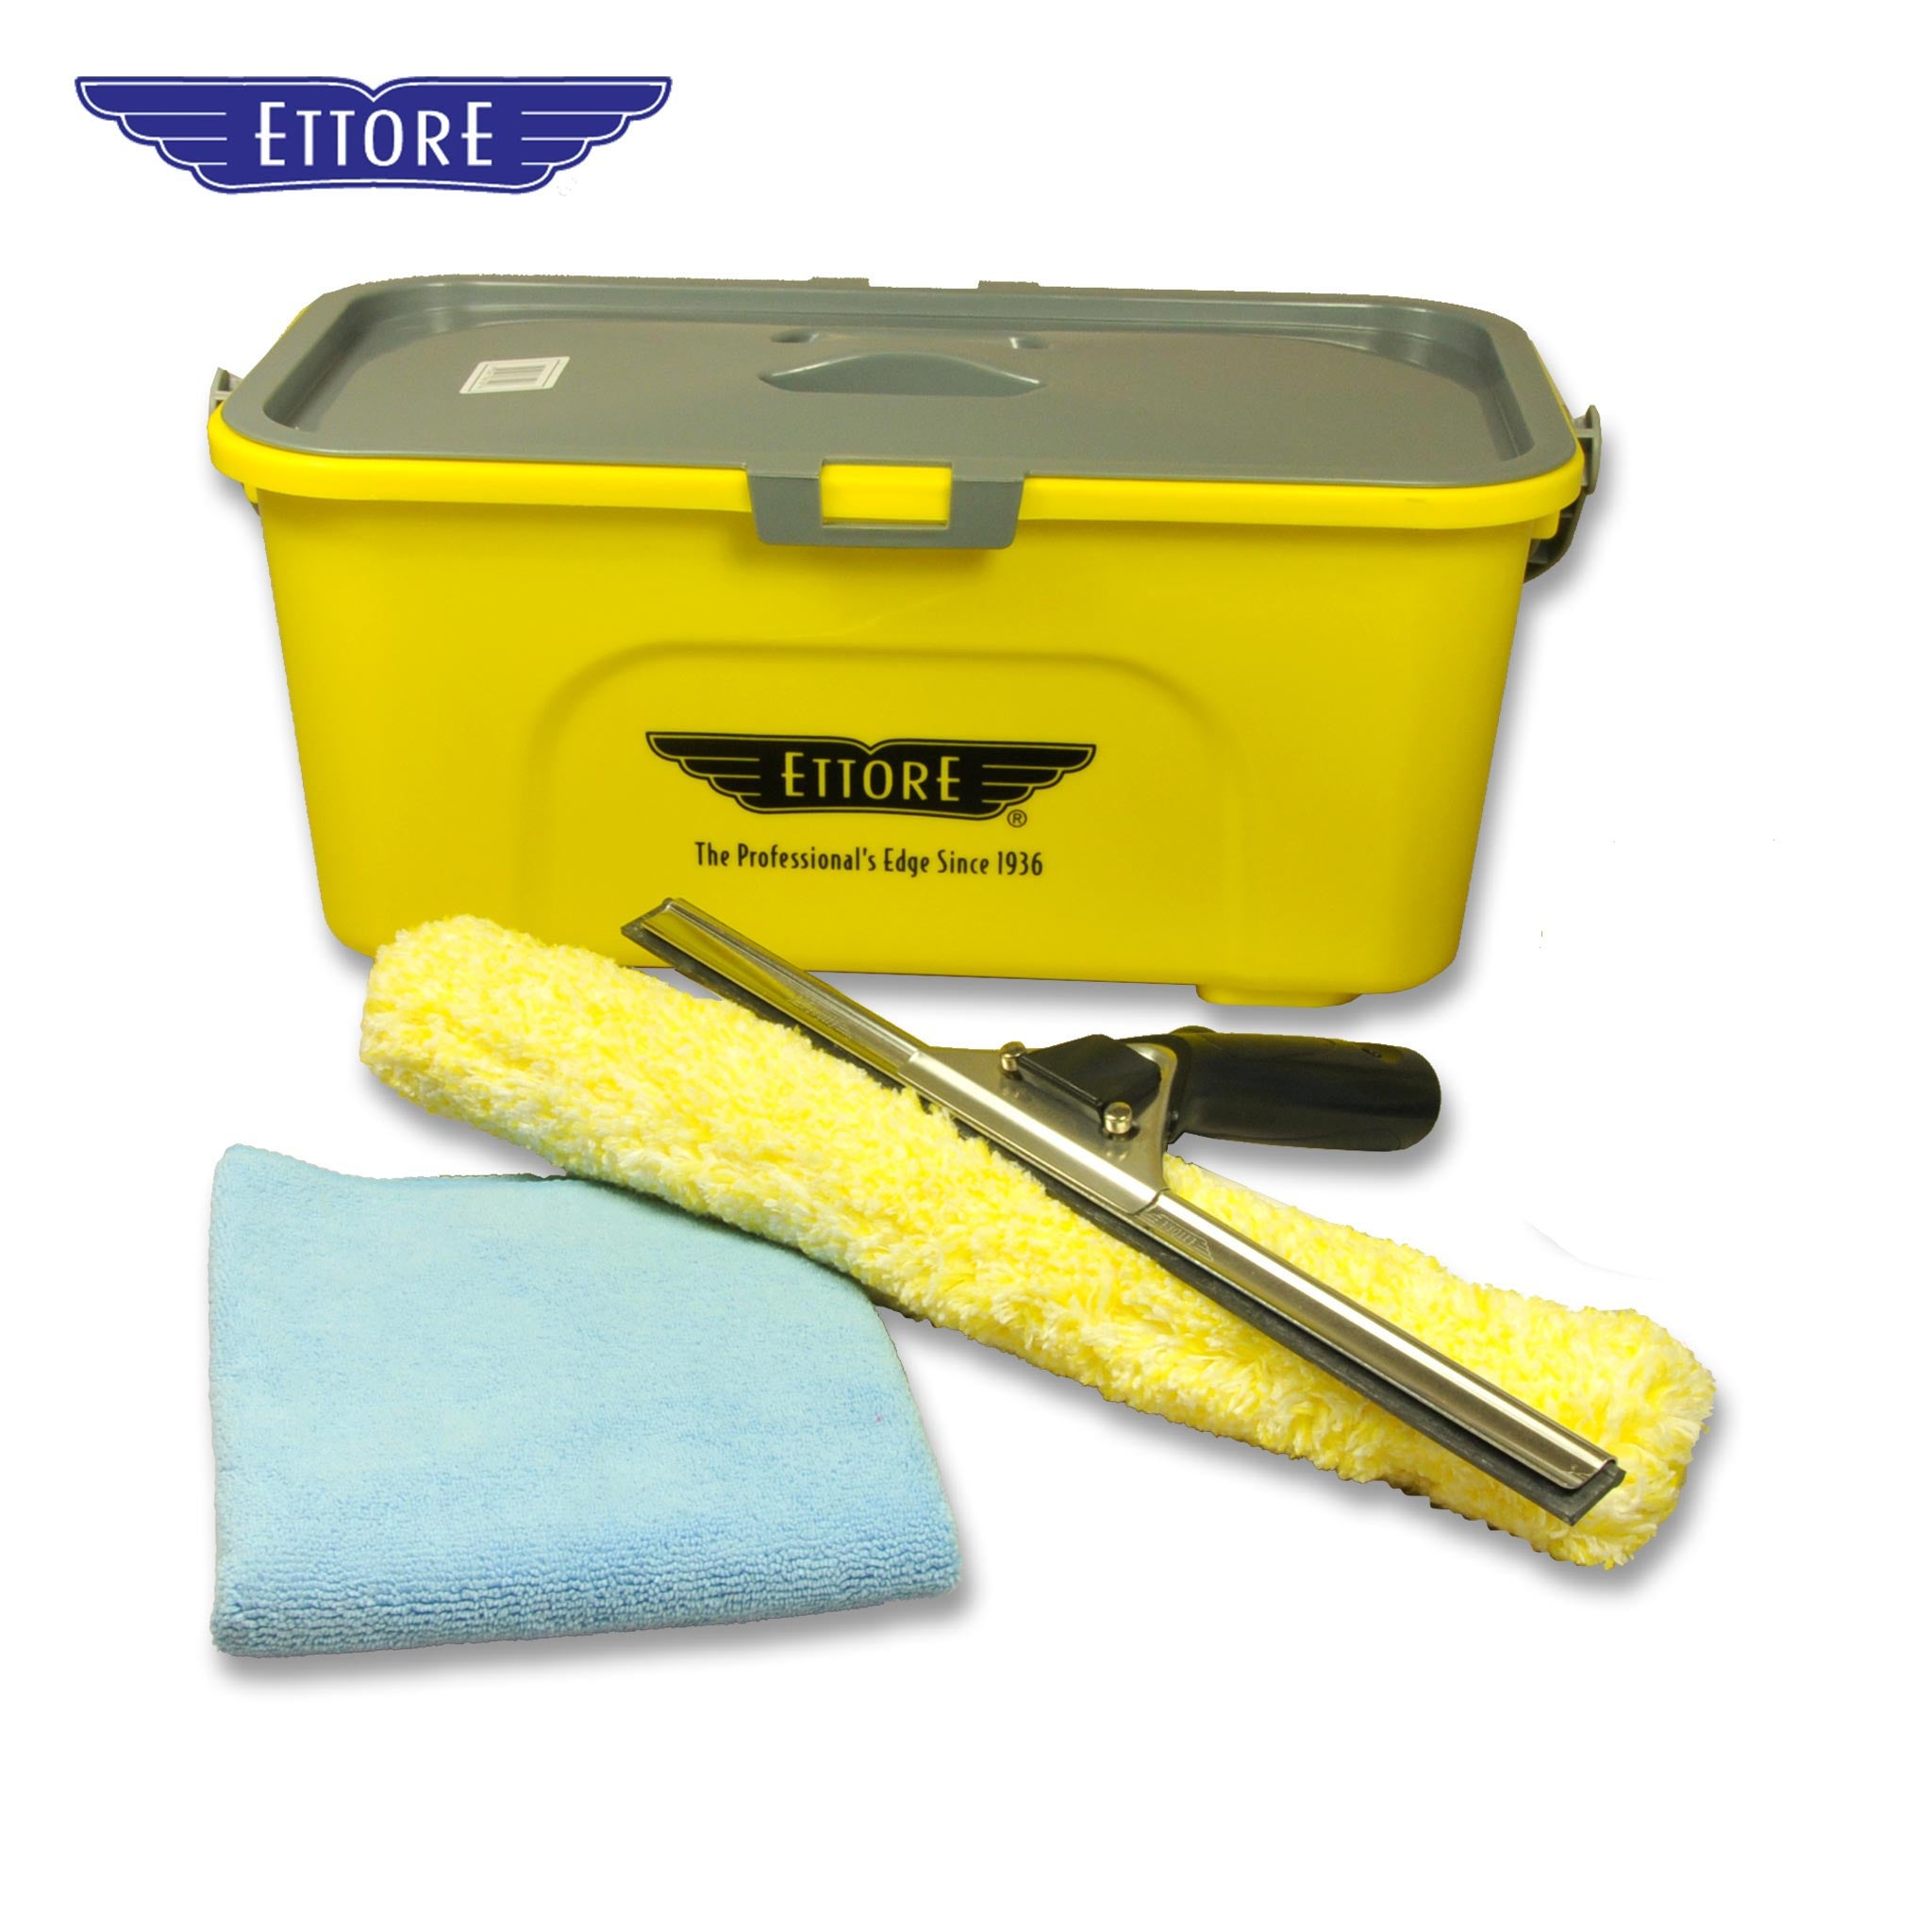 Ettore Window Cleaning Starter Kit